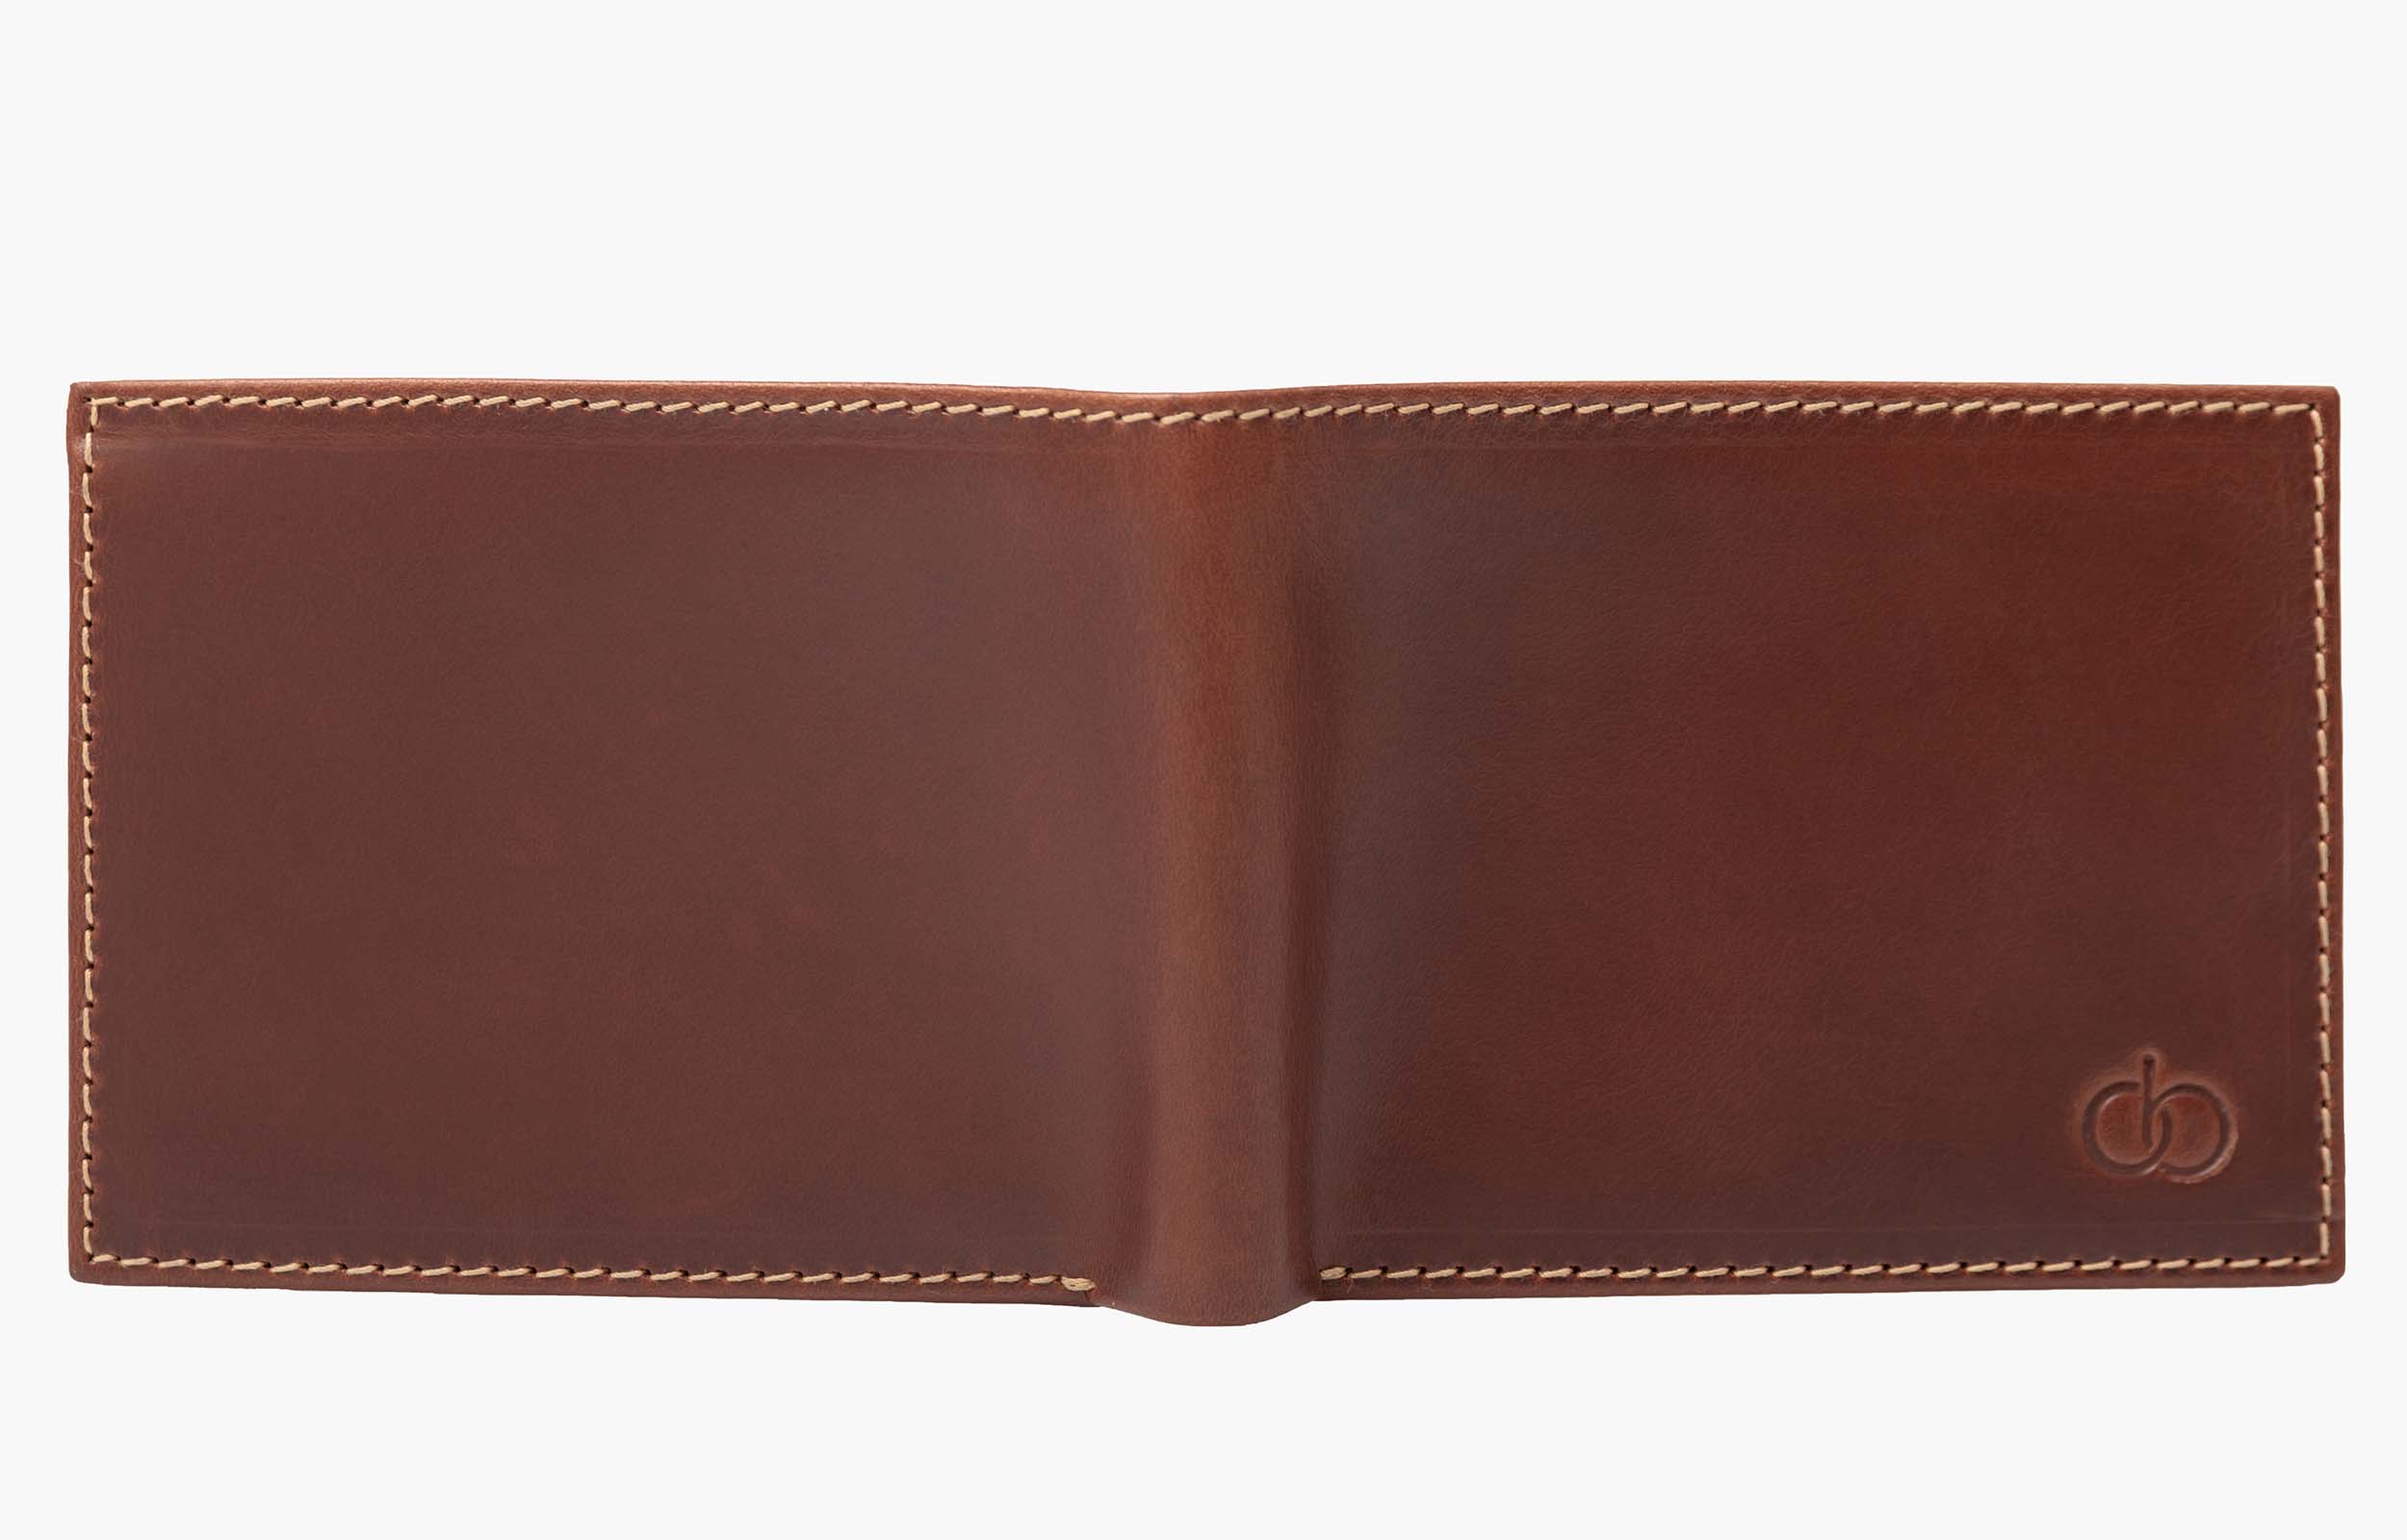 Holly Geneva Brown Leather wallet UK 7